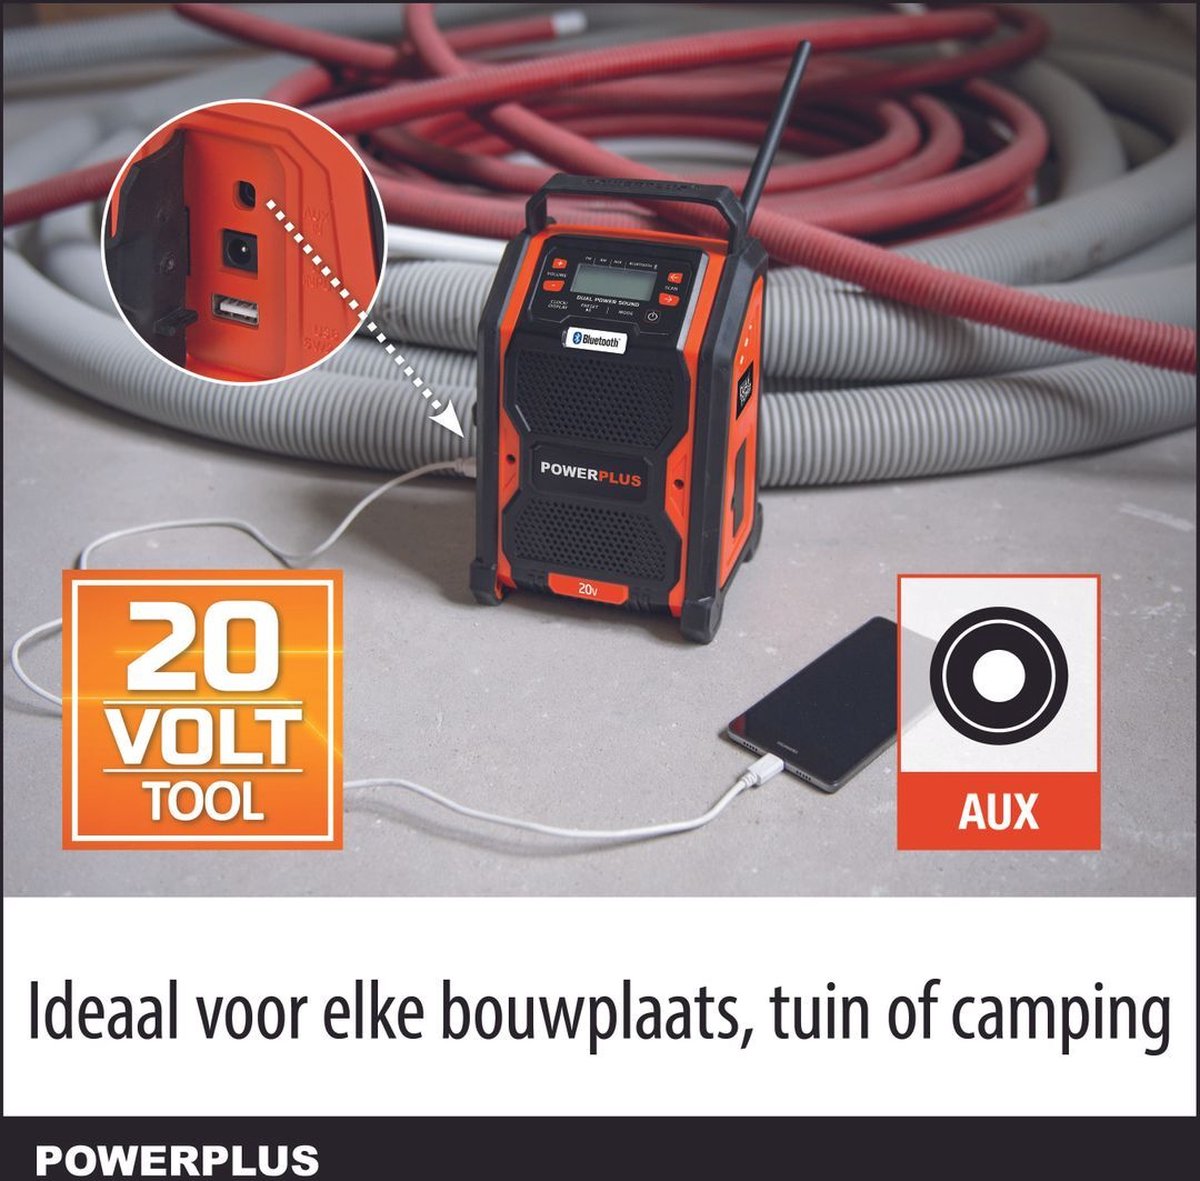 Powerplus - Dual power - POWDP8060 - Portable jobsite radio - 20V